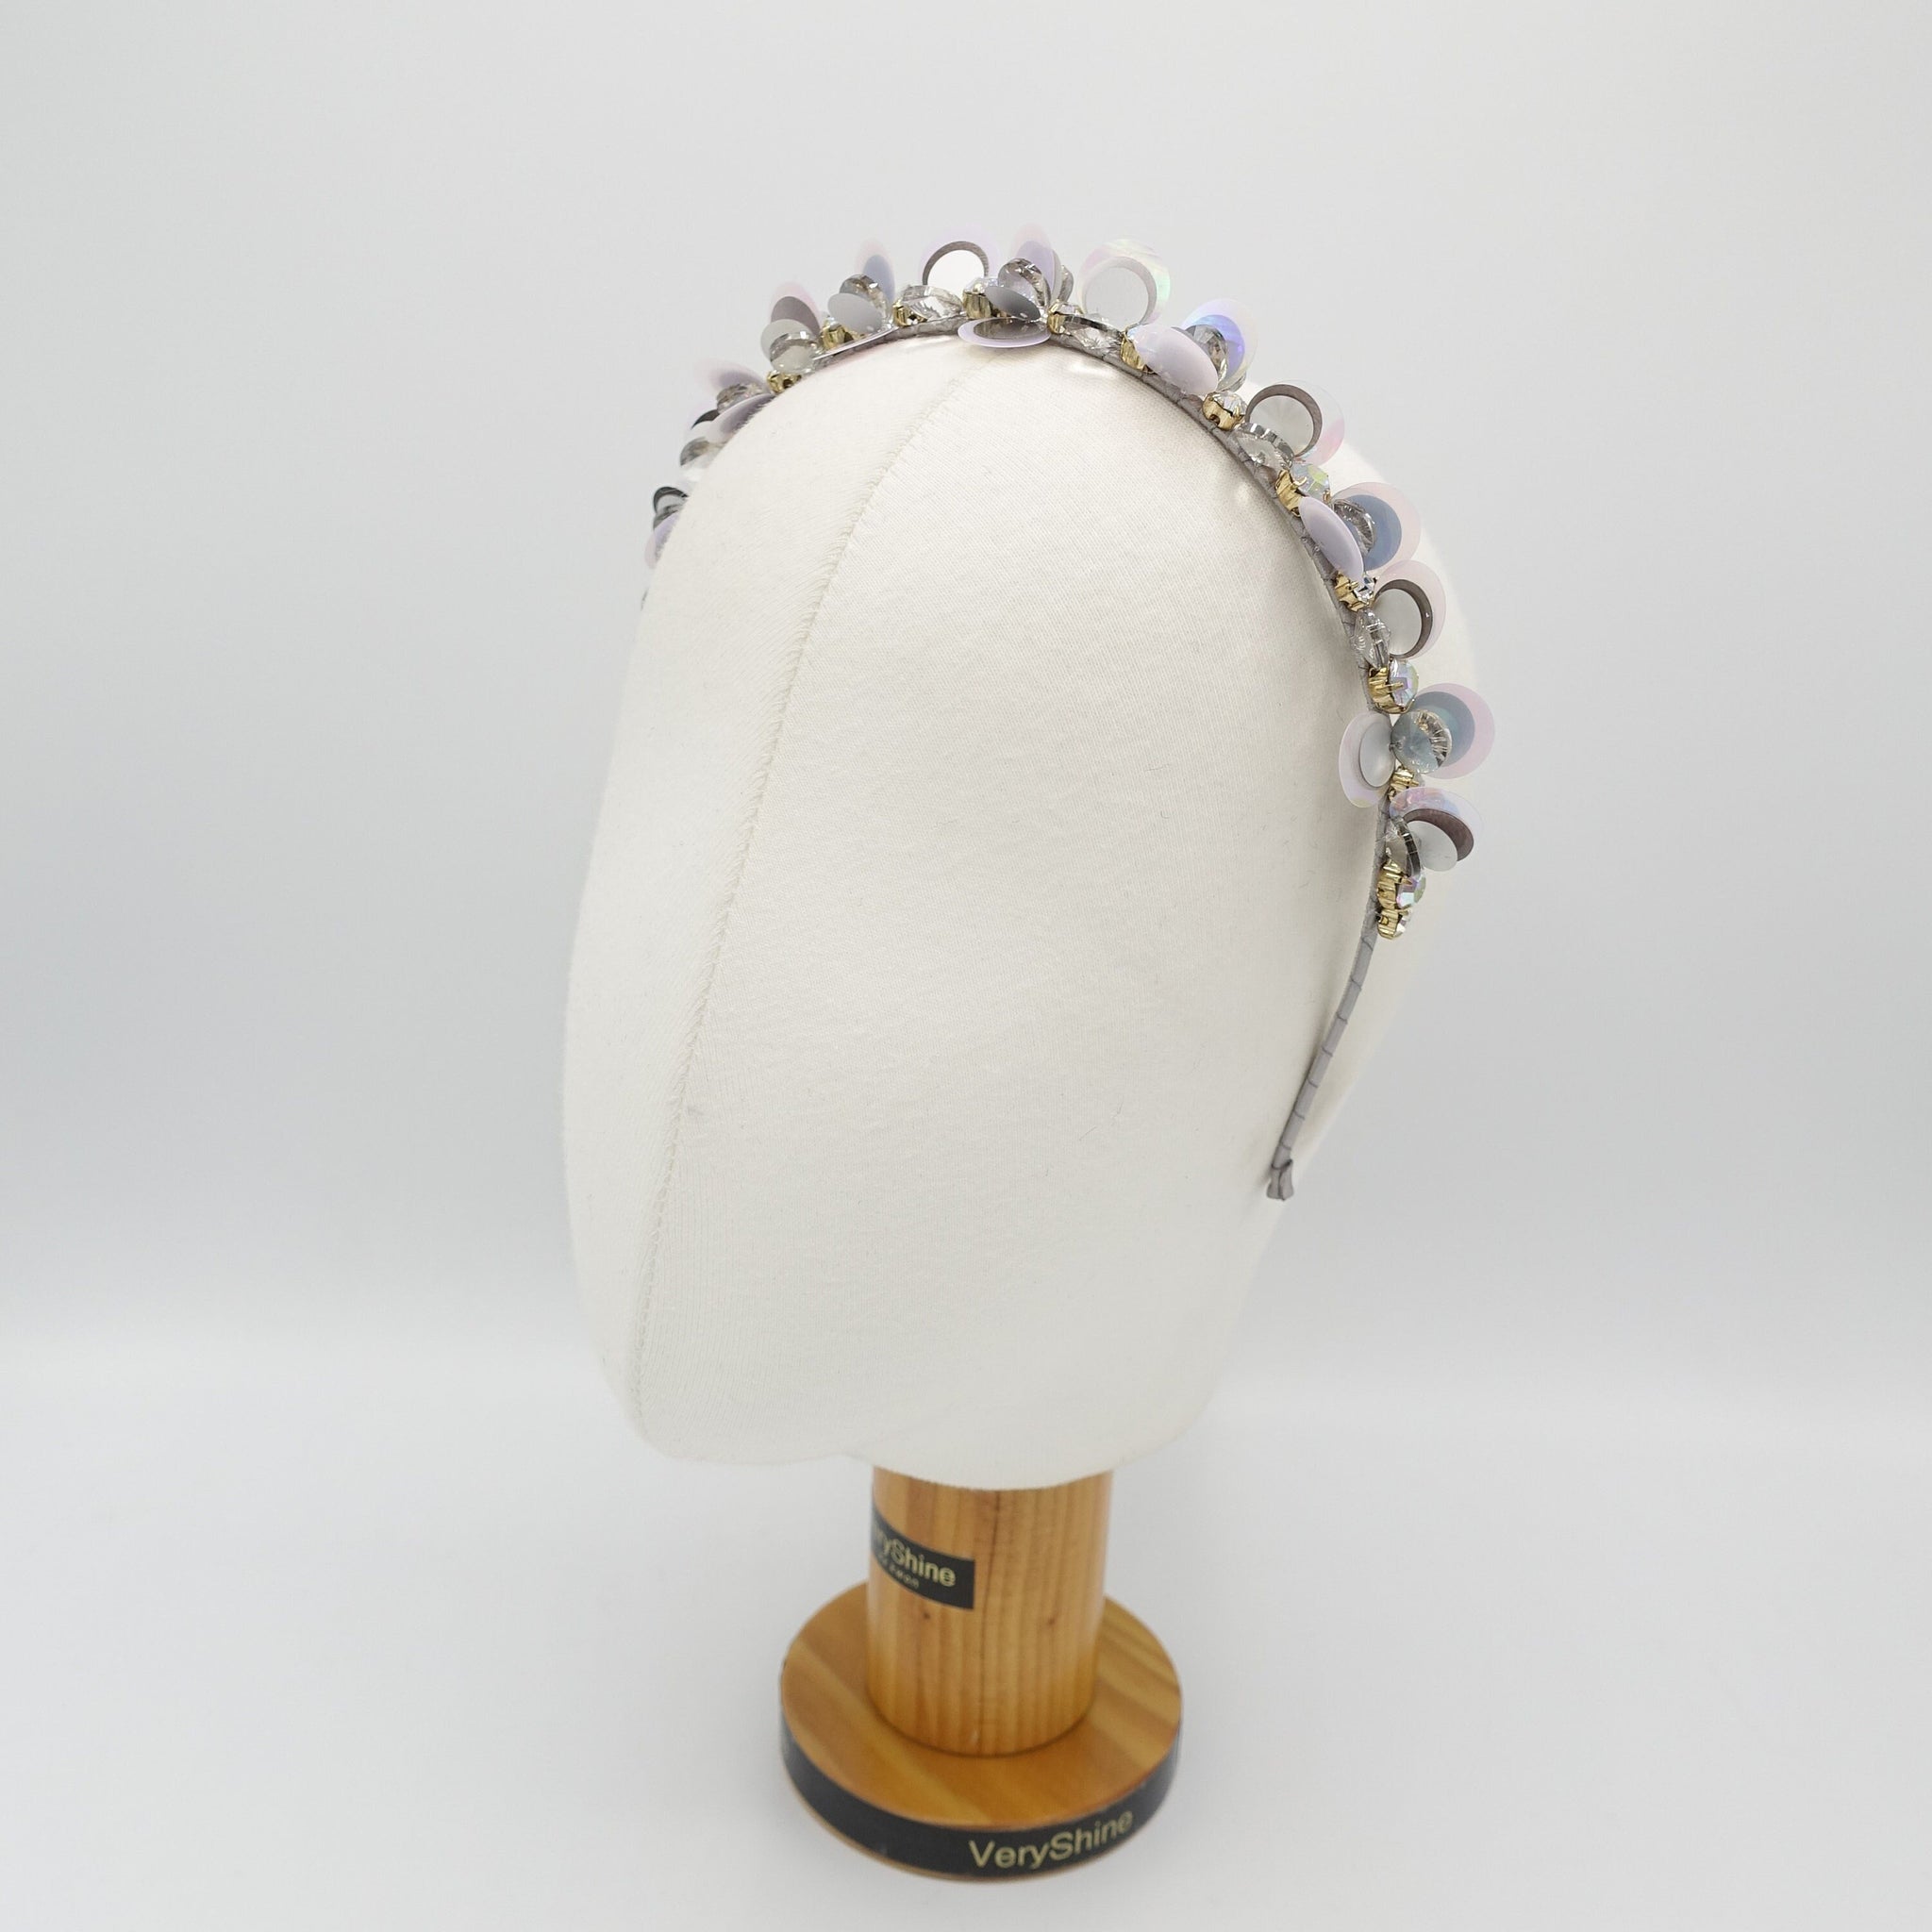 VeryShine rhinestone spangle headband for women